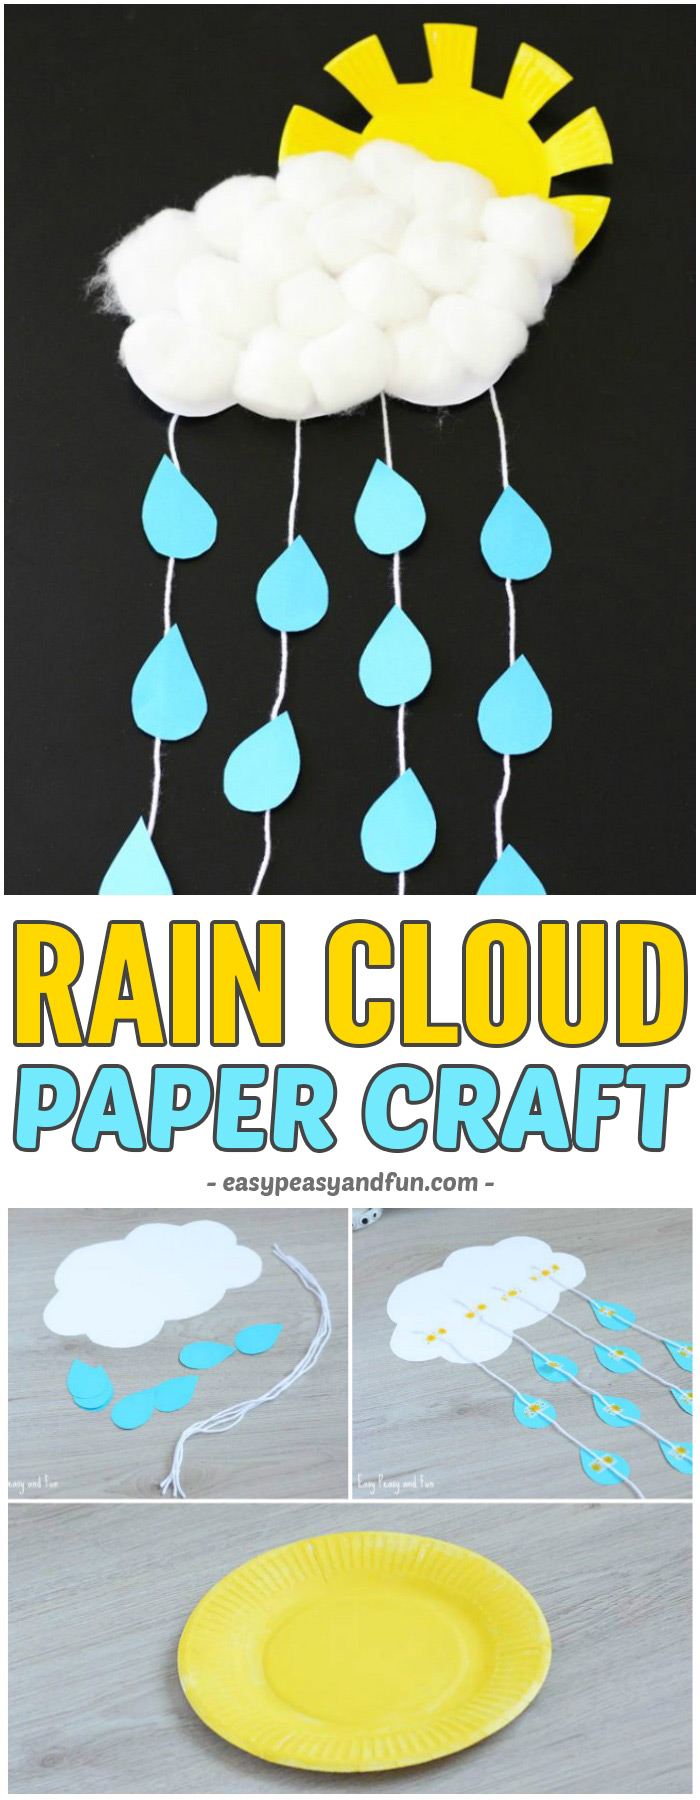 Rain Cloud Paper Craft for Kids to Make #craftsforkids #papercrafts #activitiesforkids